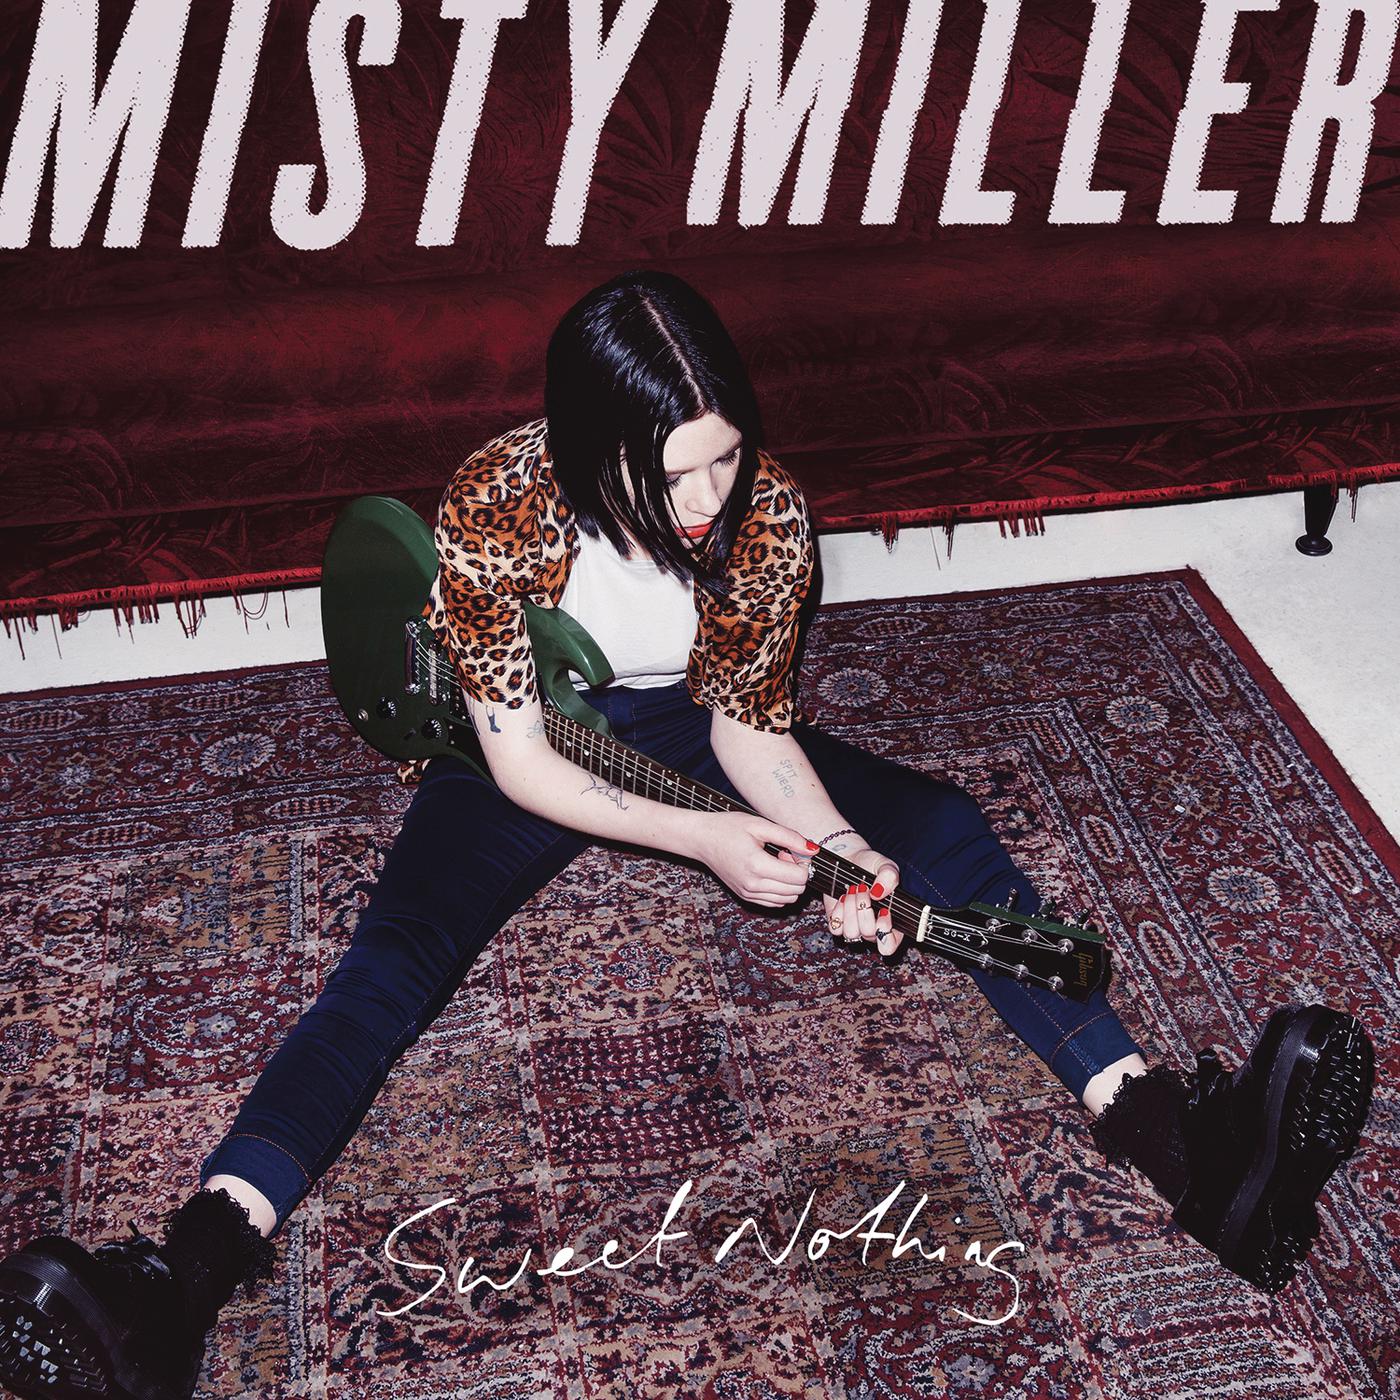 Misty Miller - Stars (Stripped)